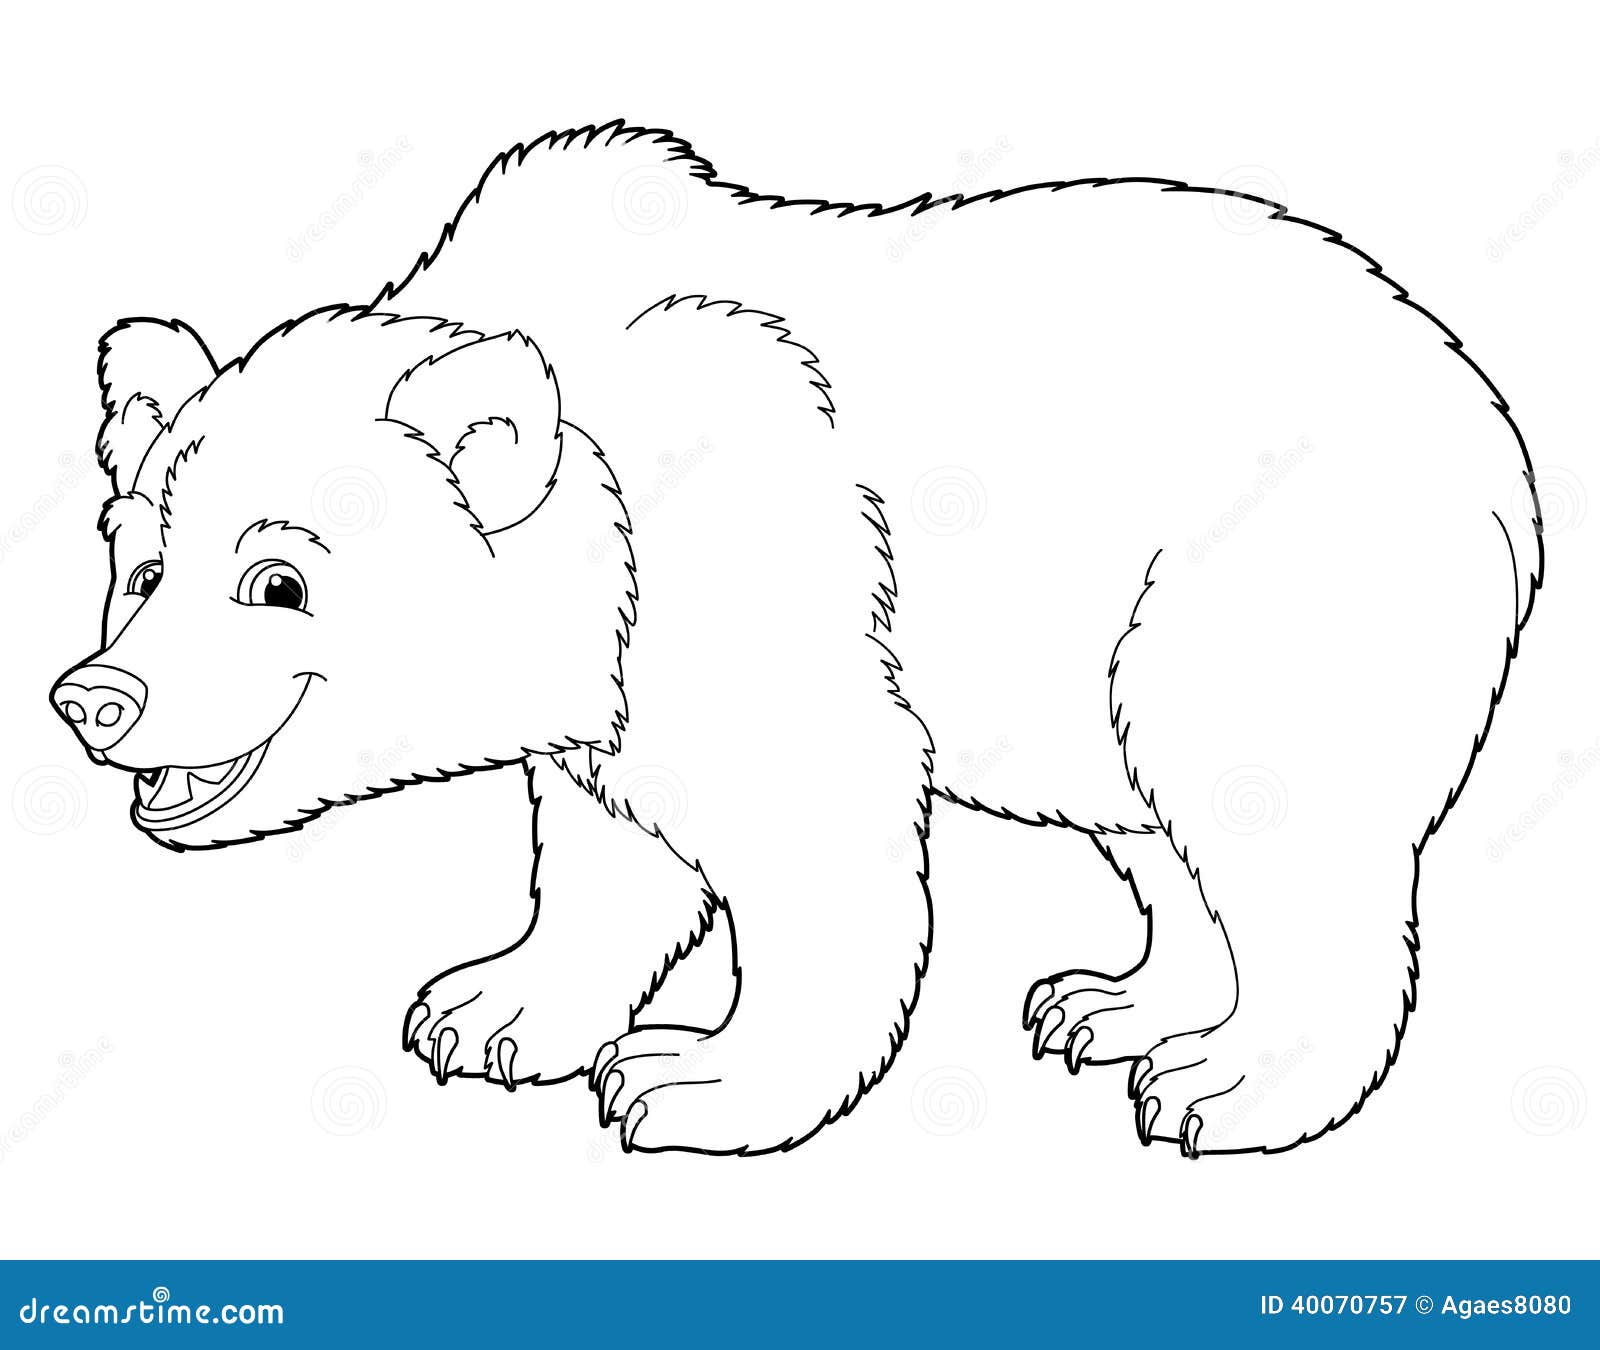 bear coloring cartoon animal illustration children dreamstime